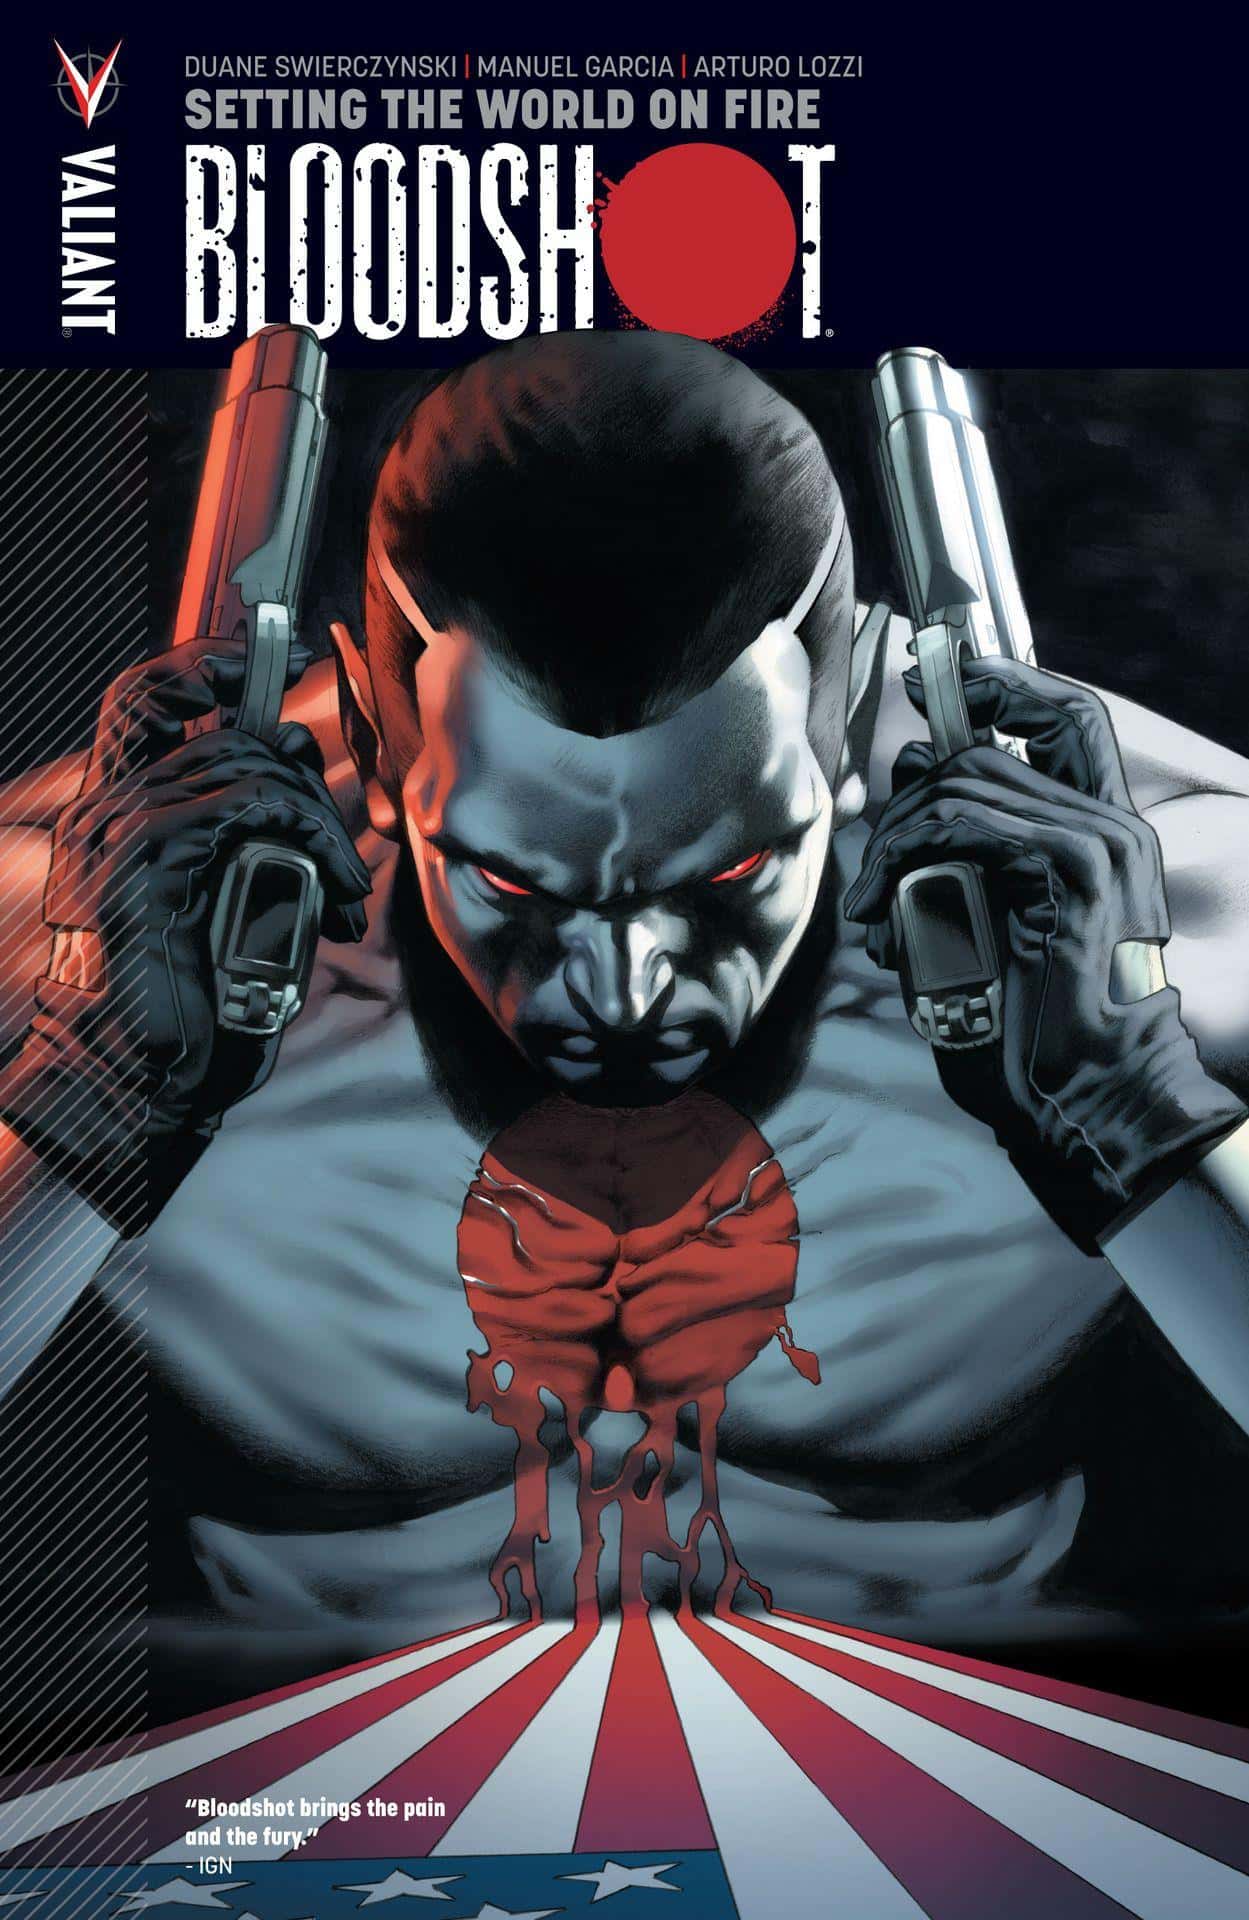 download best bloodshot comics